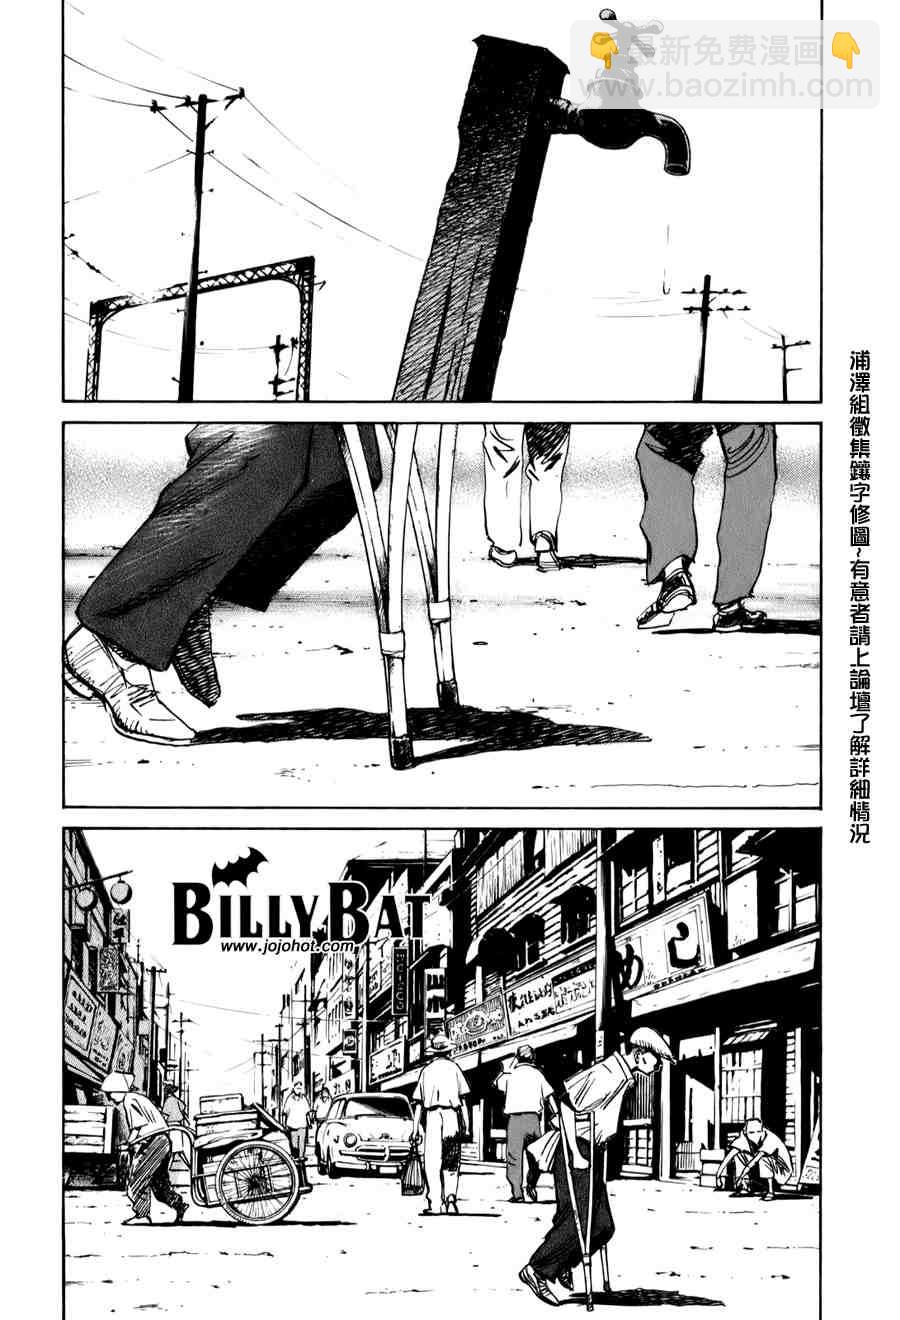 Billy_Bat - 第1卷(1/4) - 7